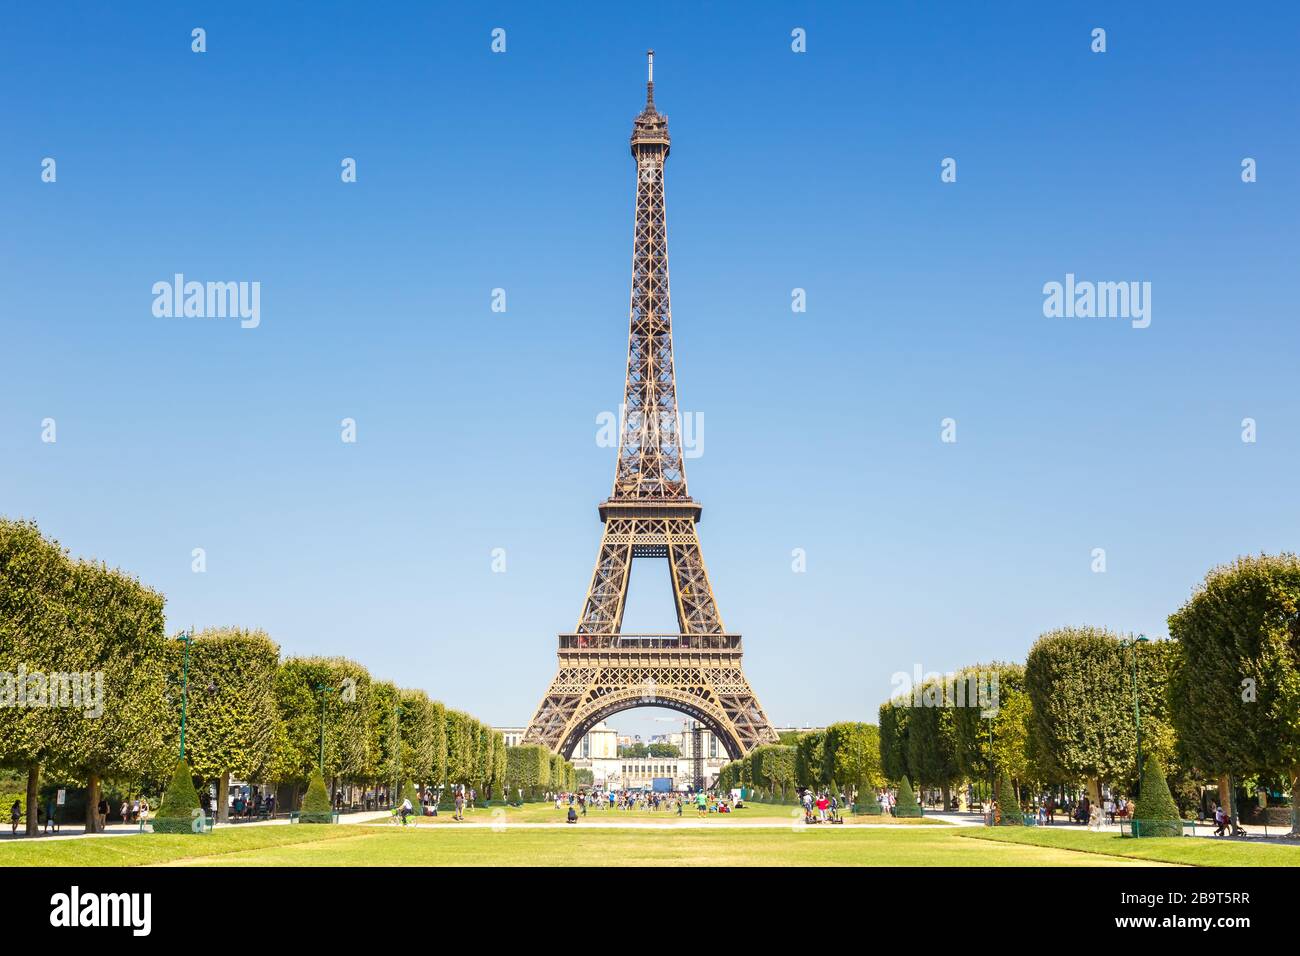 Eiffel tower Paris France travel traveling sight landmark travelling Stock Photo